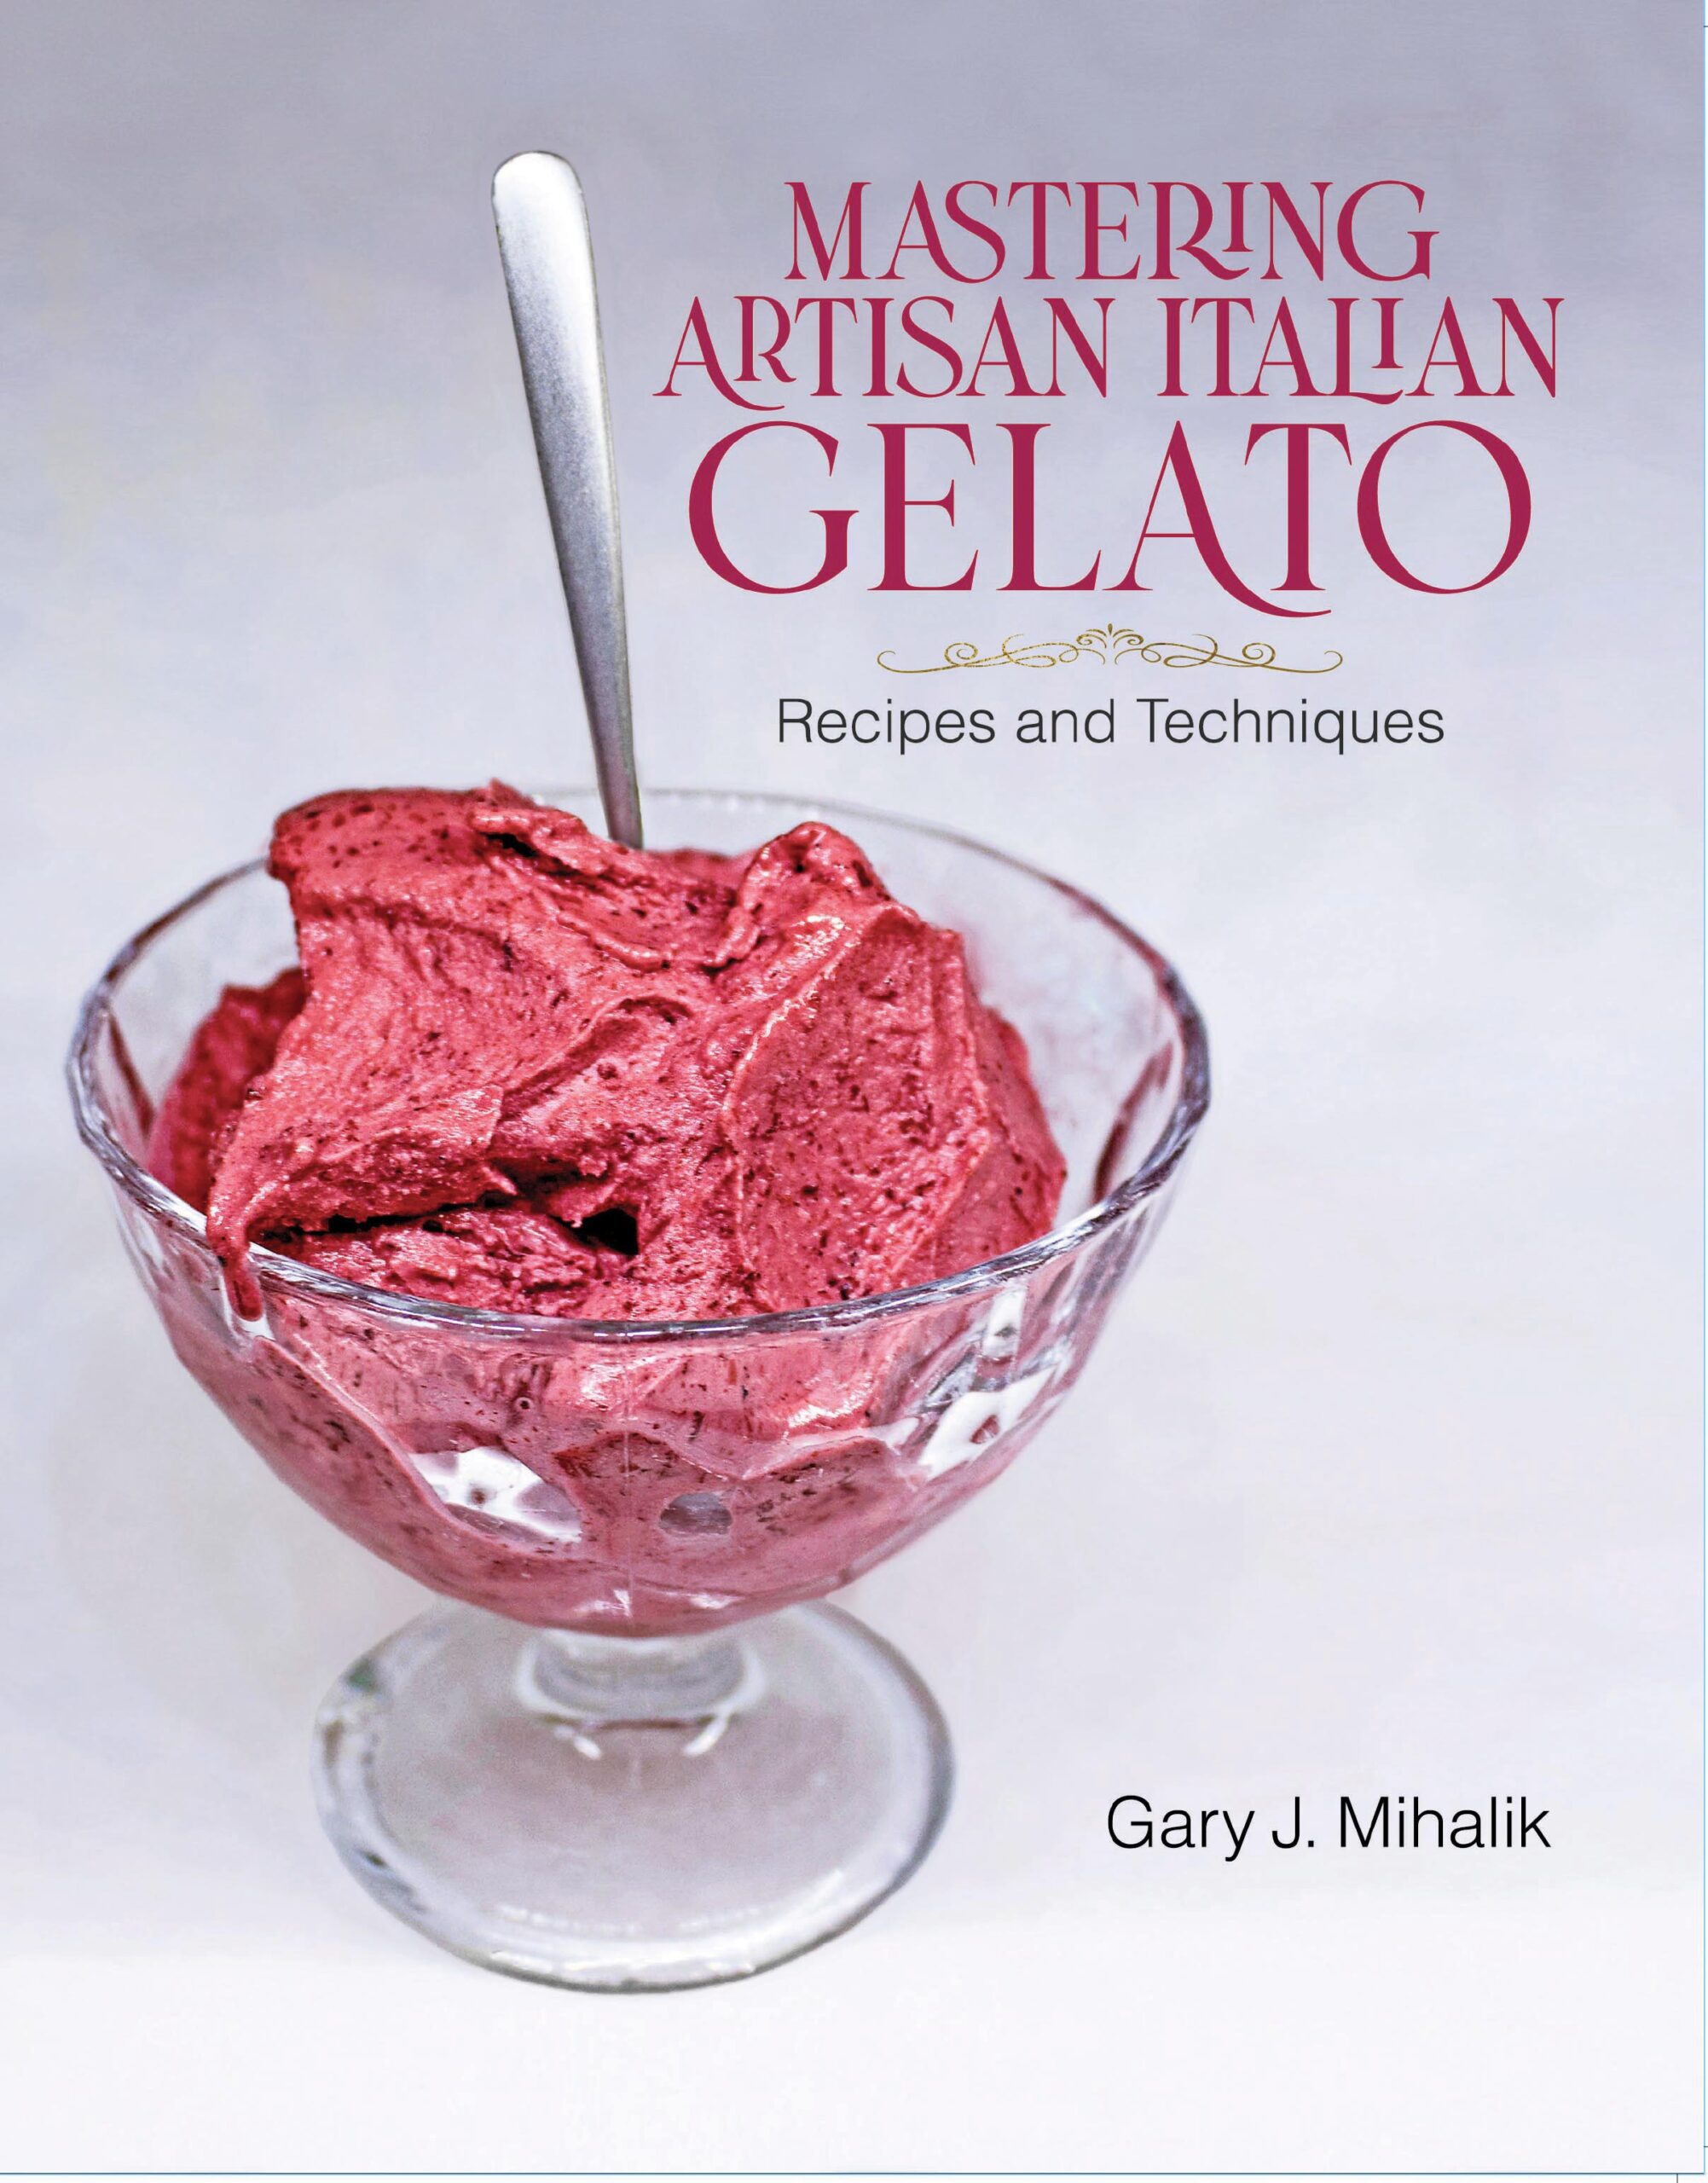 Mastering Artisan Italian Gelato by Gary J. Mihalik